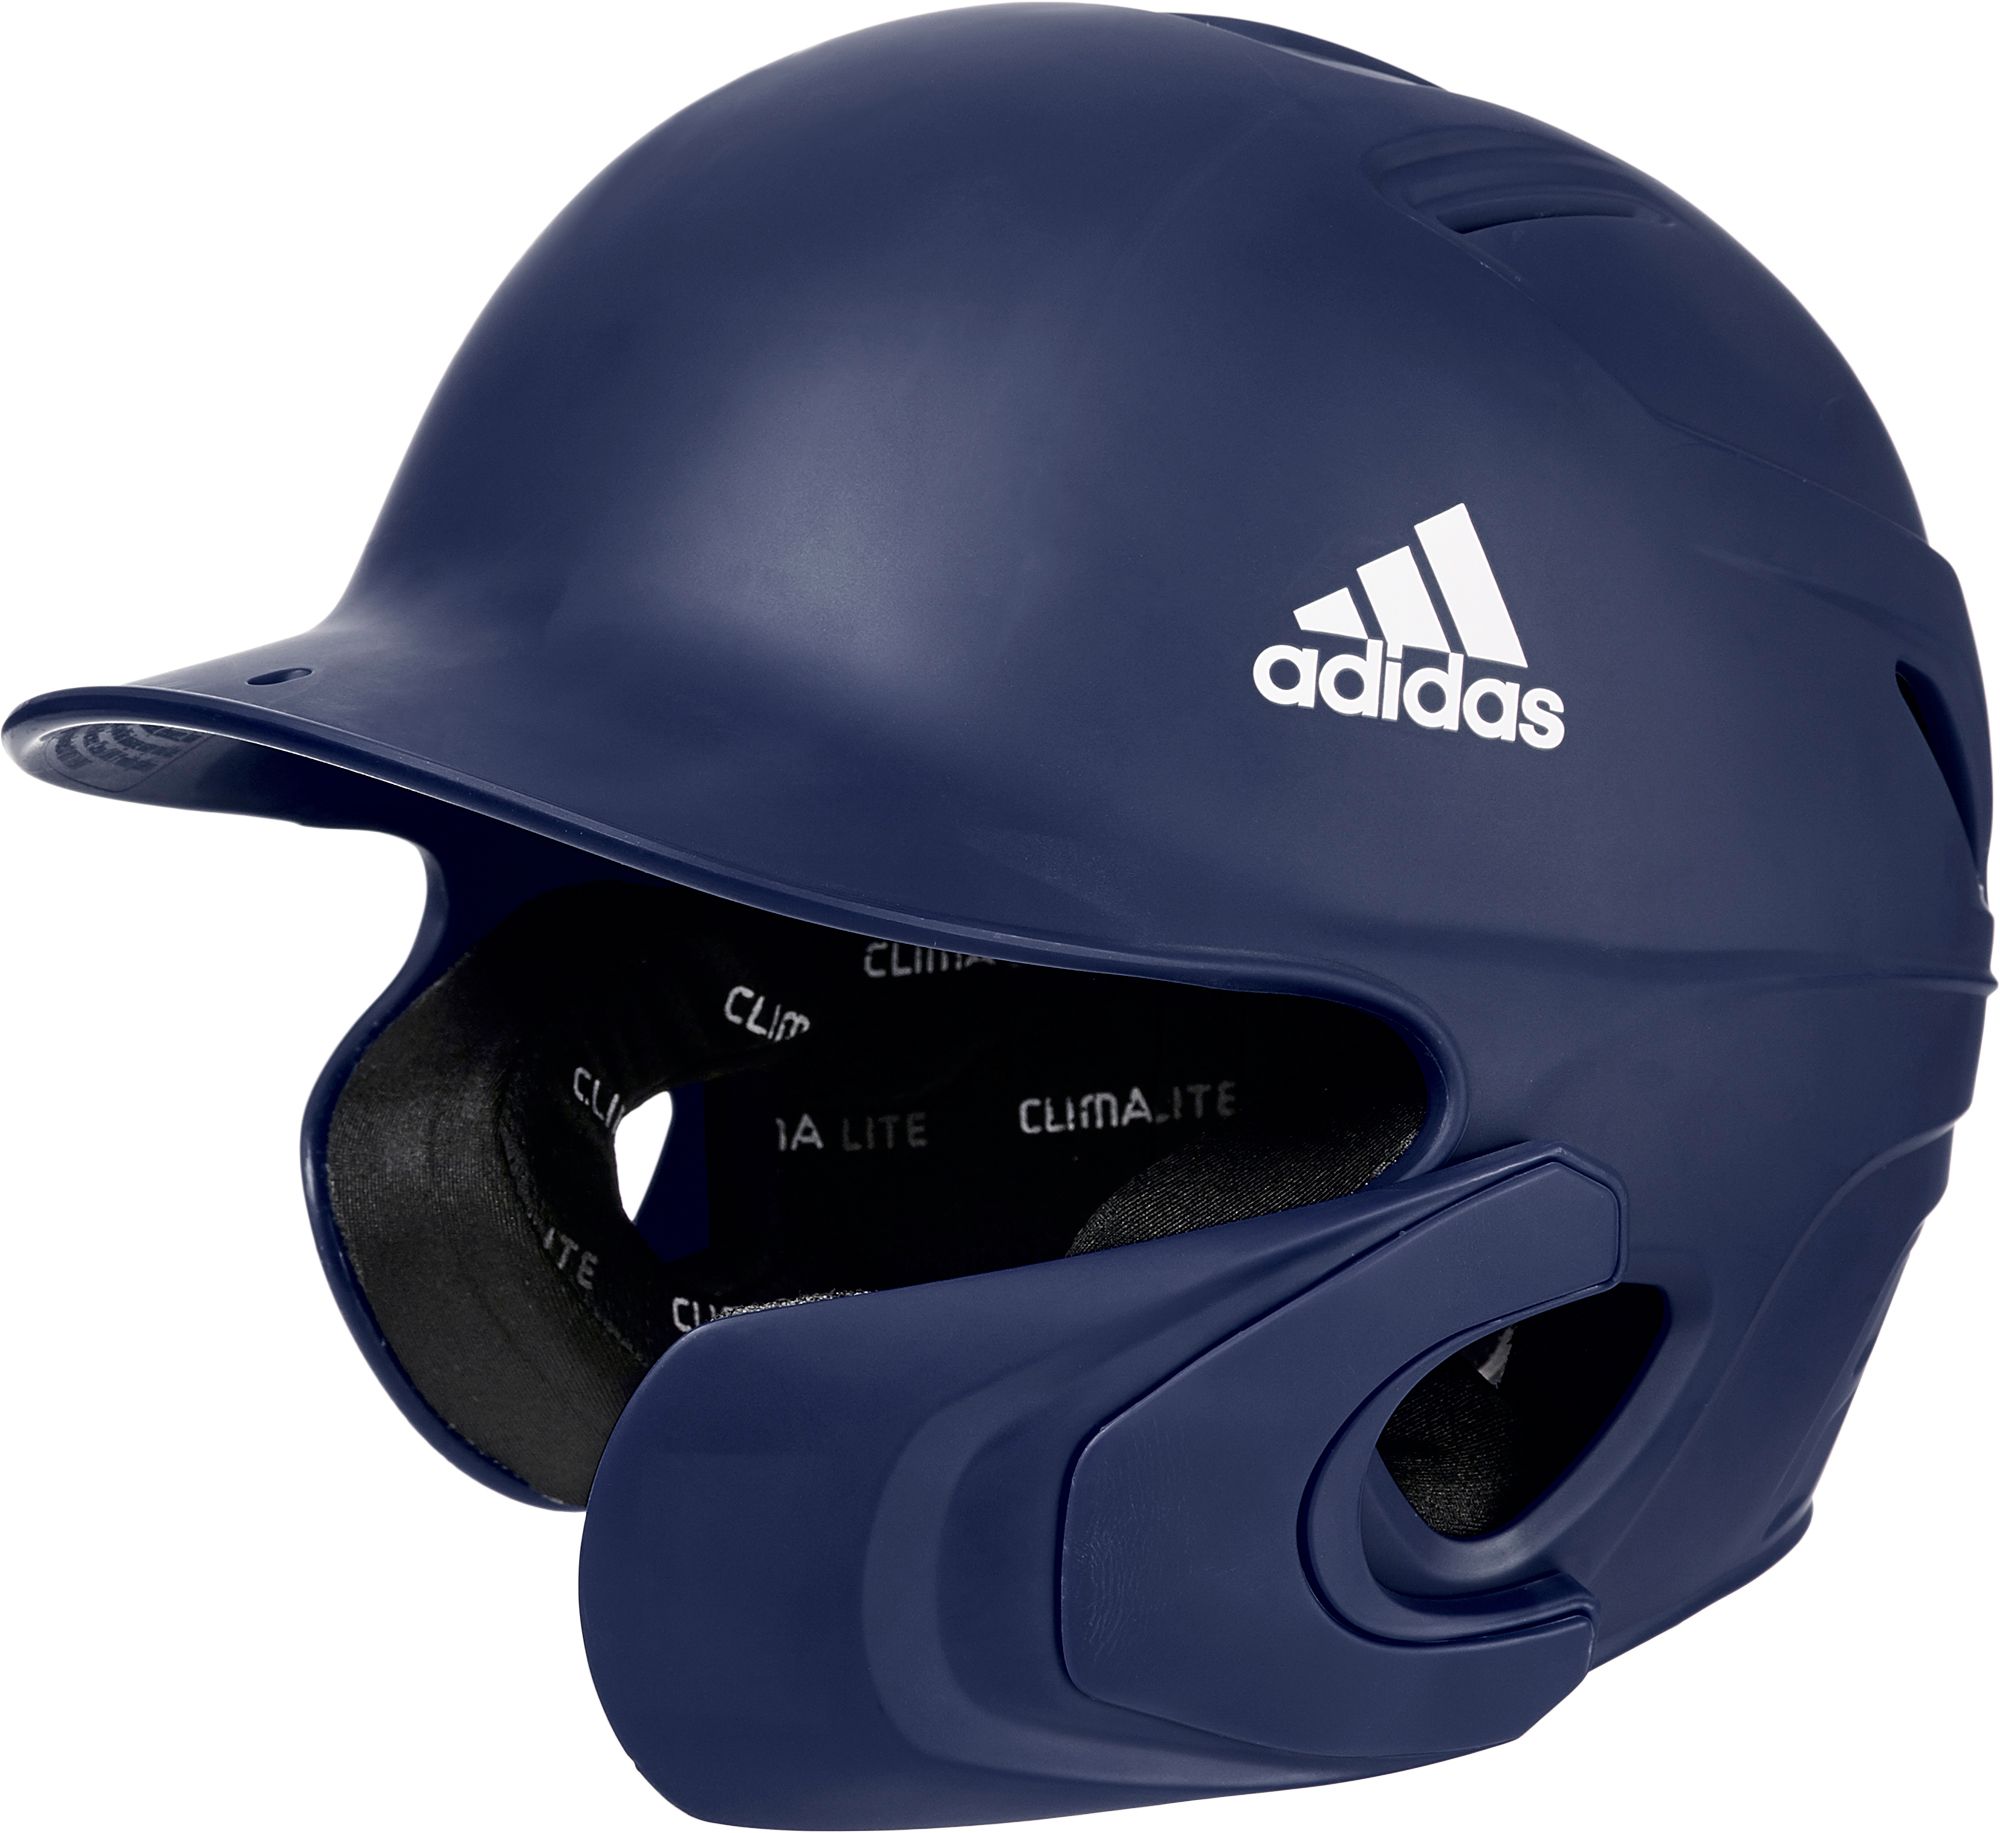 helmet: Adidas Baseball Helmet Jaw Guard